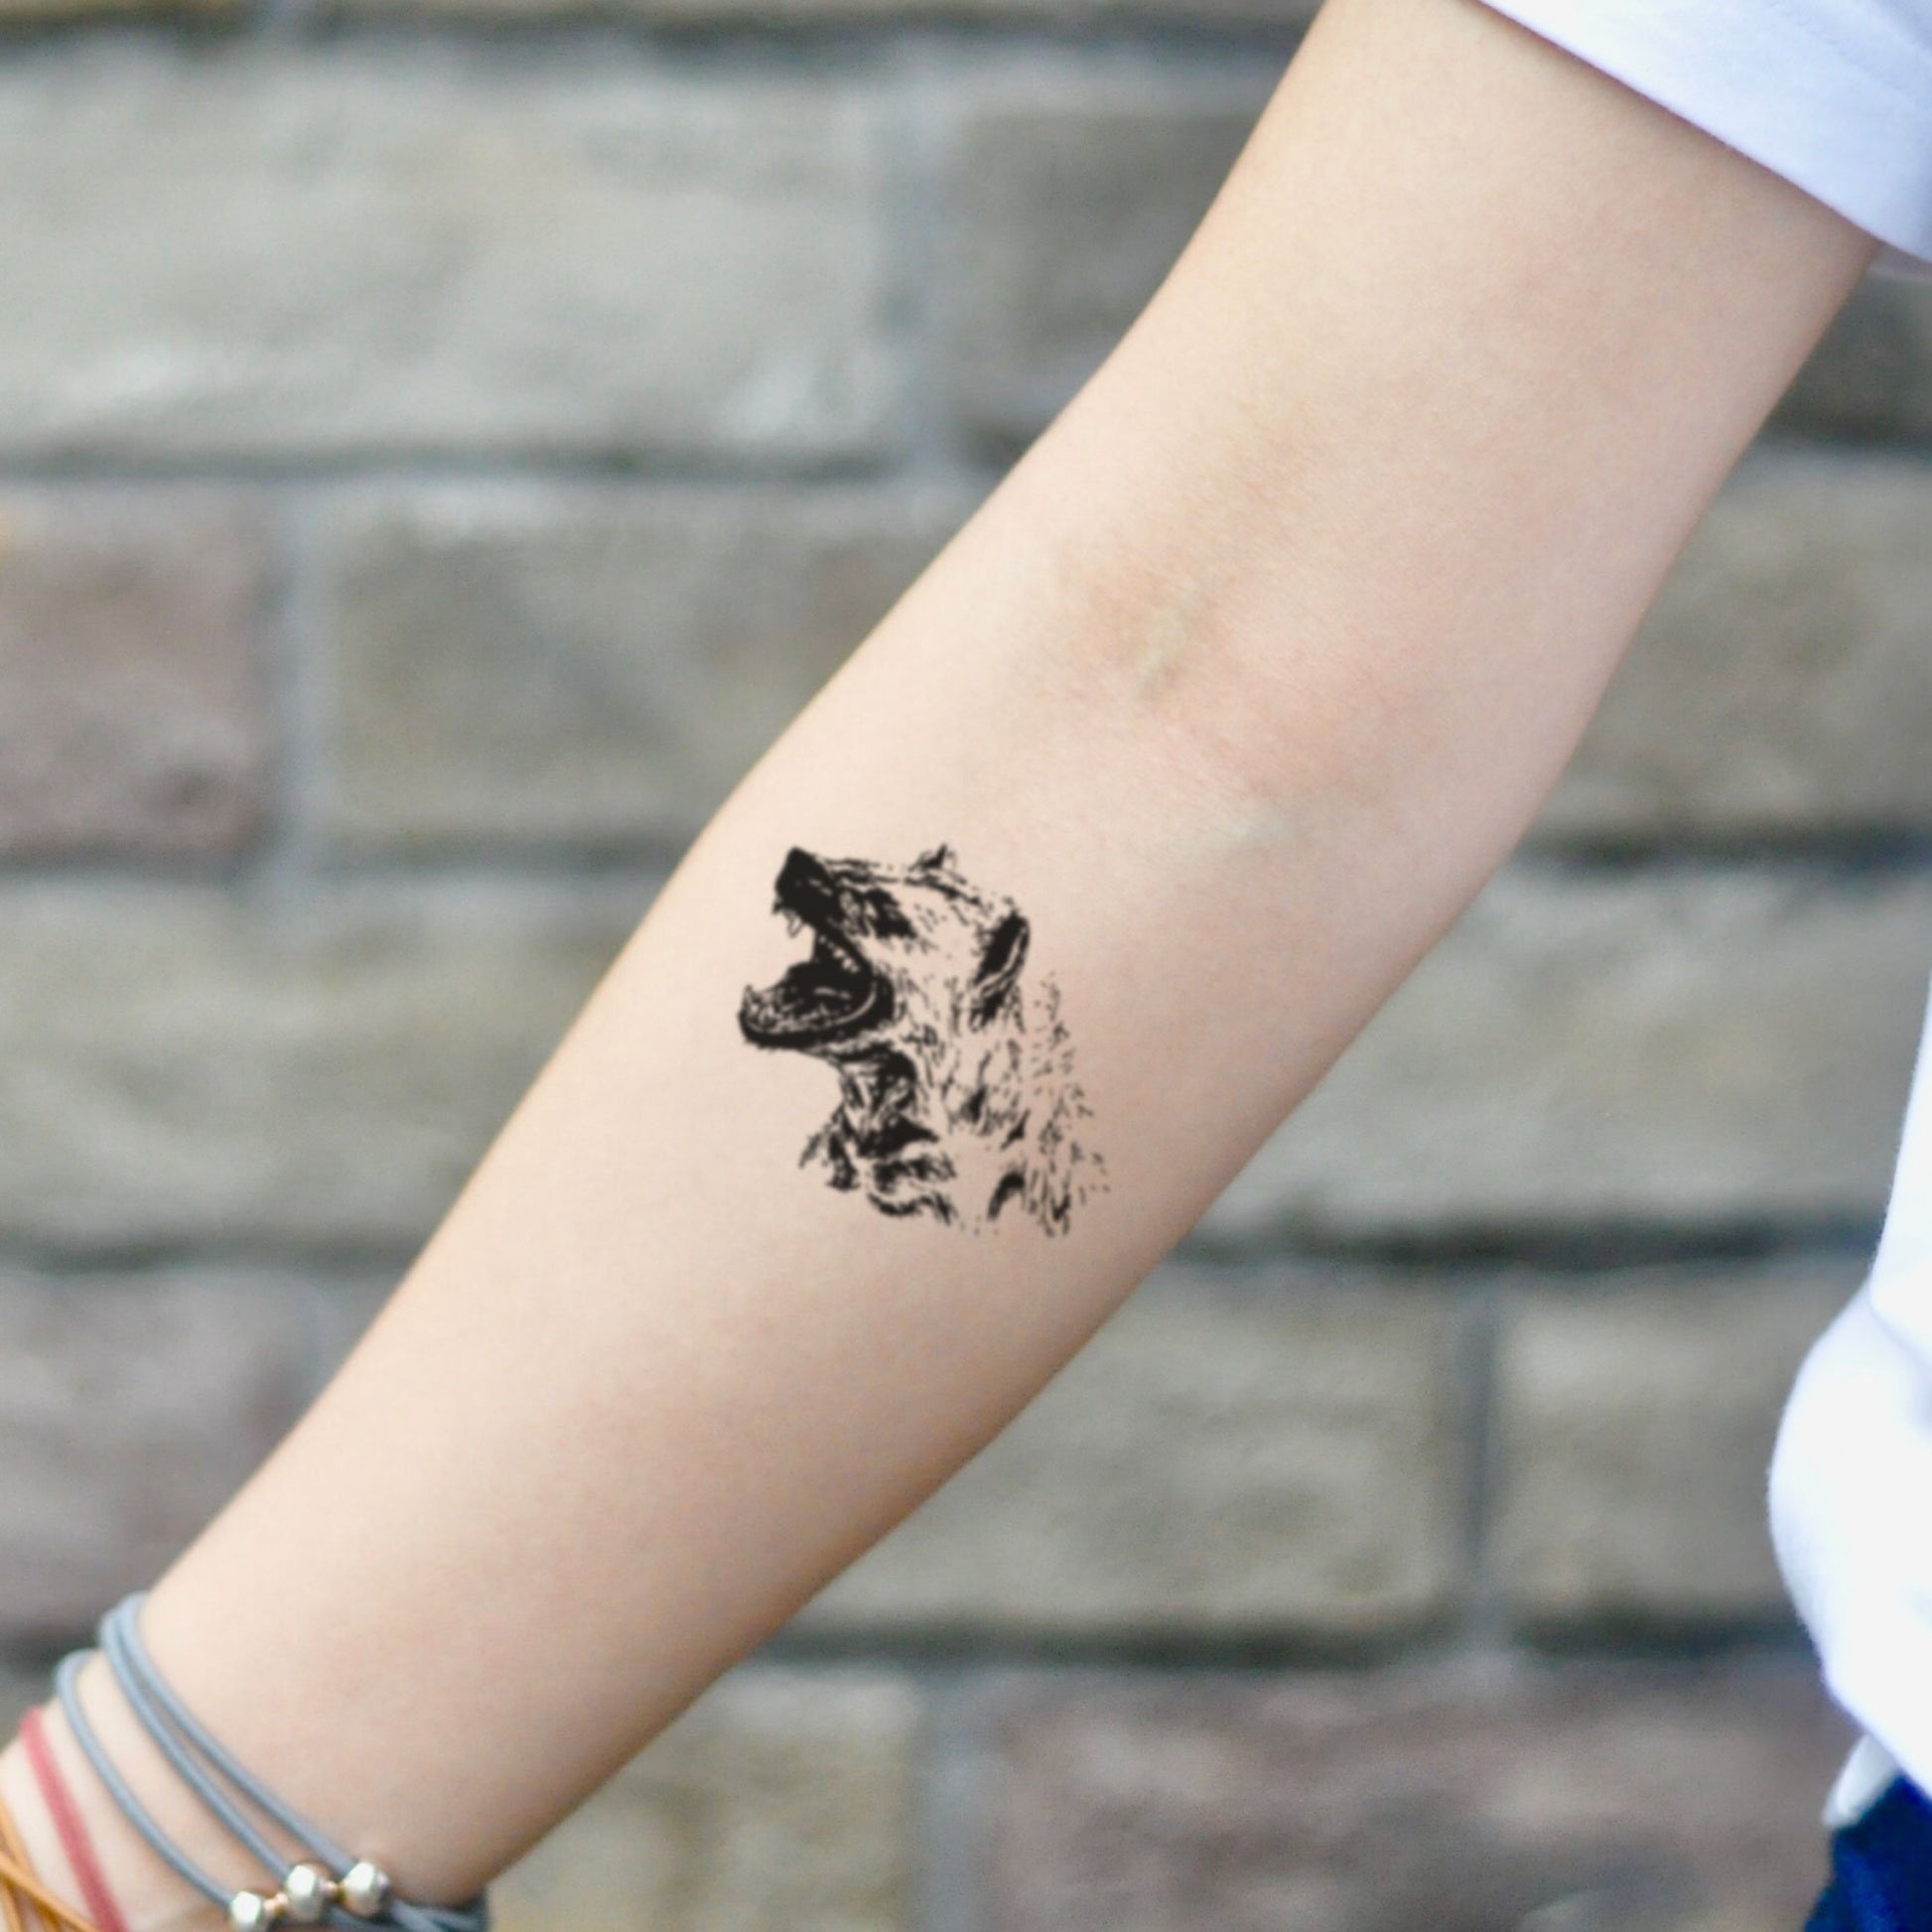 fake small laughing hyena animal temporary tattoo sticker design idea on inner arm